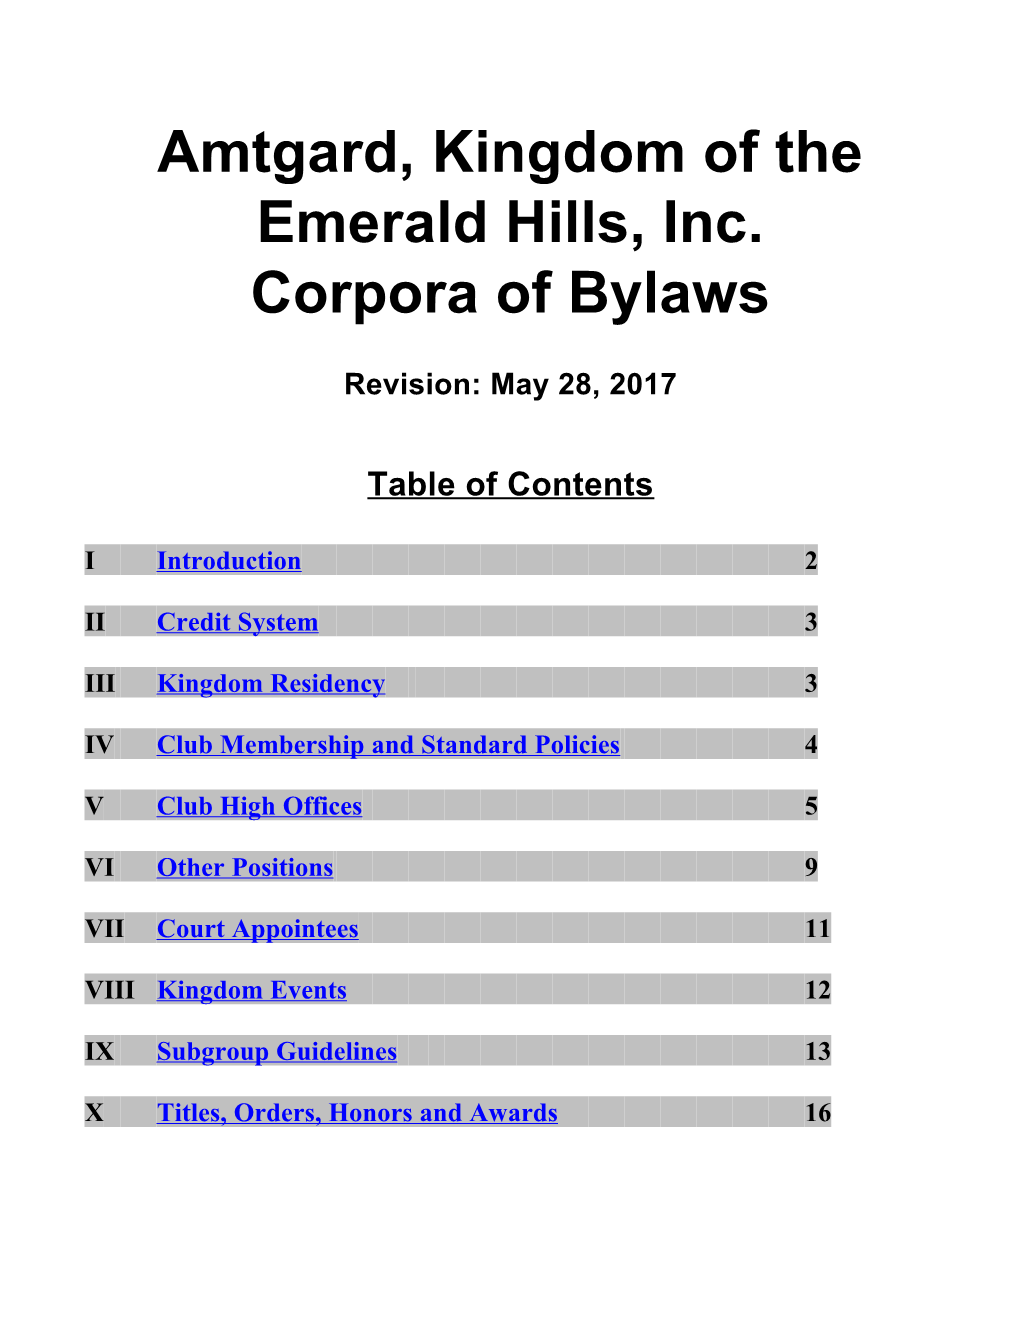 Emerald Hills Corpora